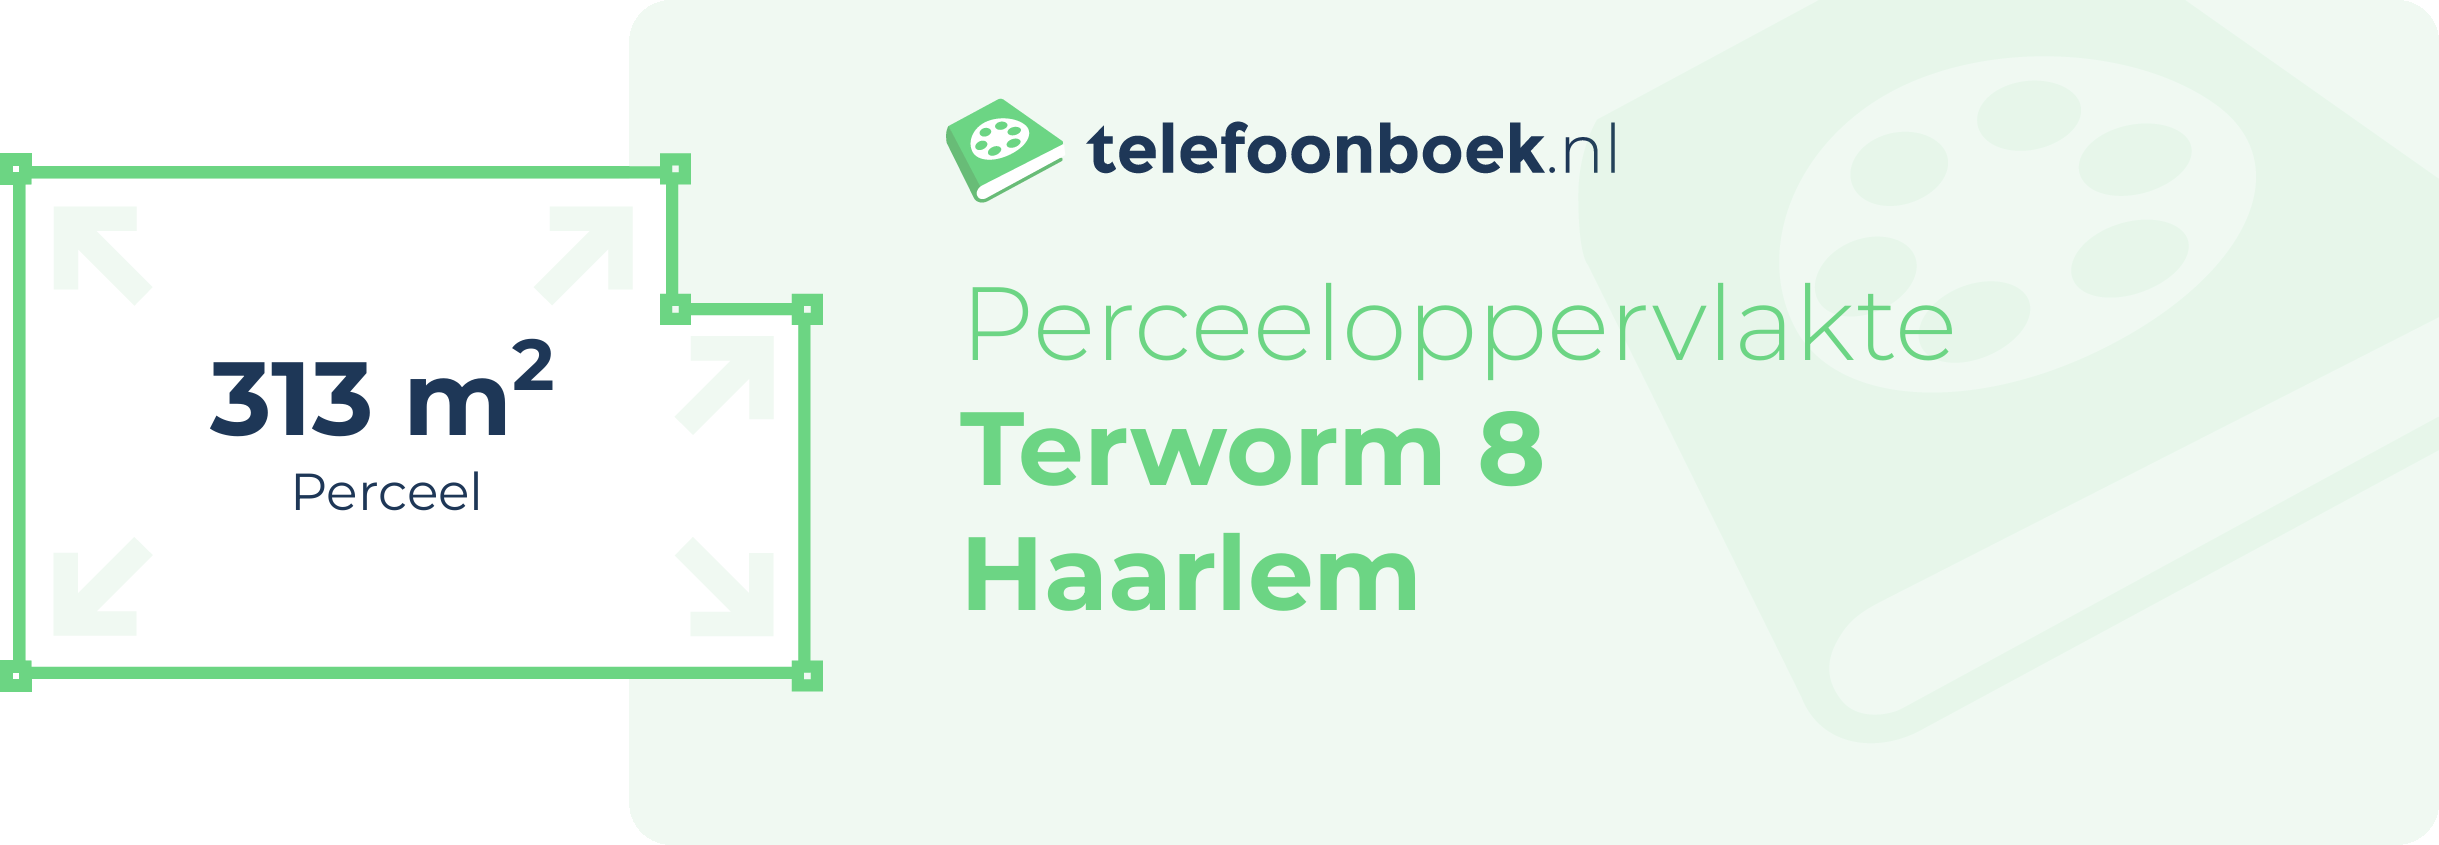 Perceeloppervlakte Terworm 8 Haarlem